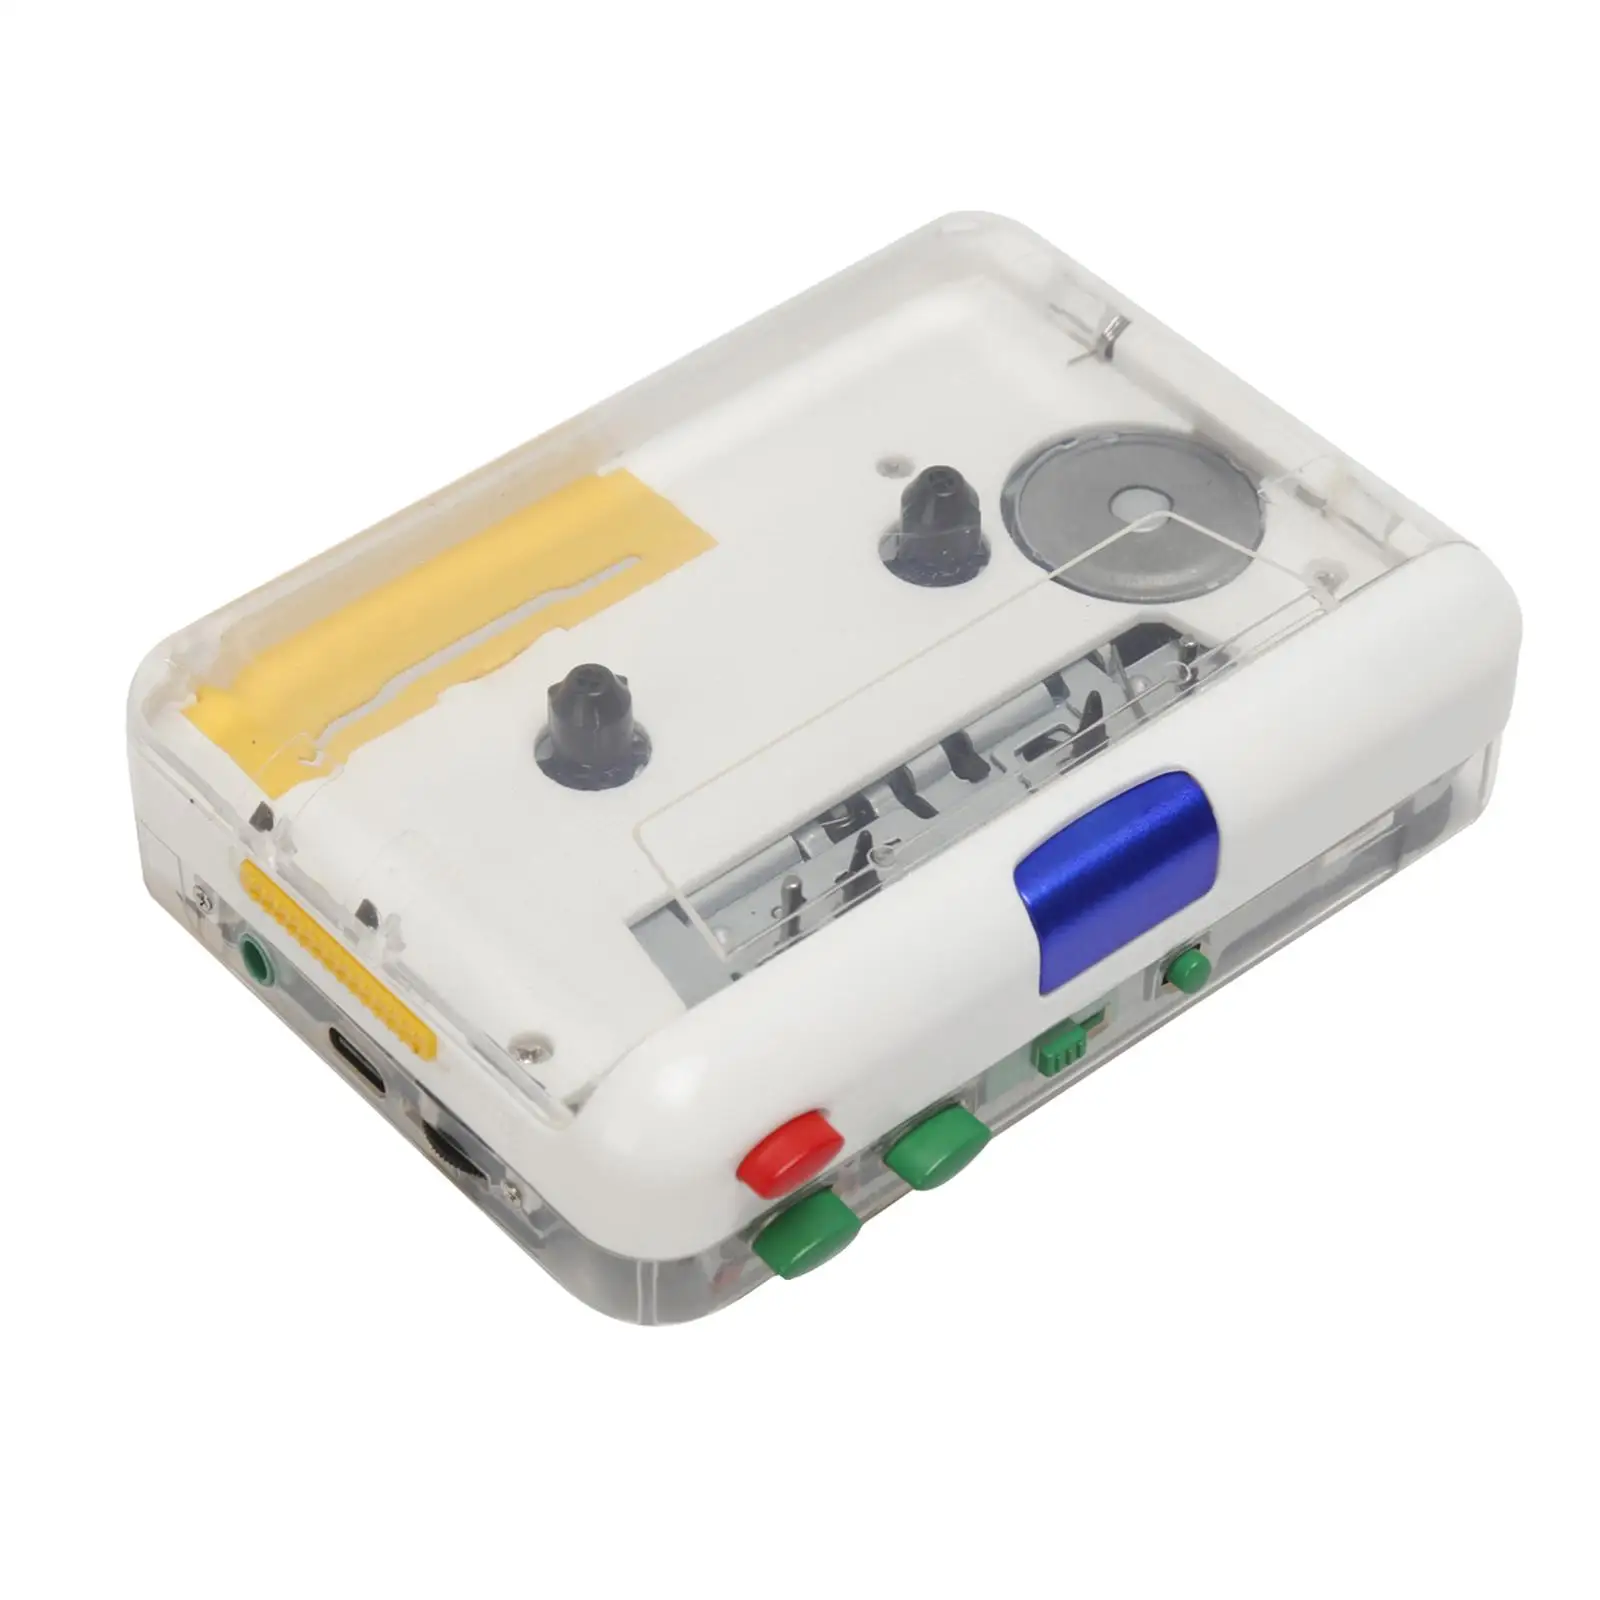 Portable Cassette Player 3.5mm Headphone Convert Tapes Output to Headphone/Speaker Bluetooth Transfer Cassette to MP3 Converter